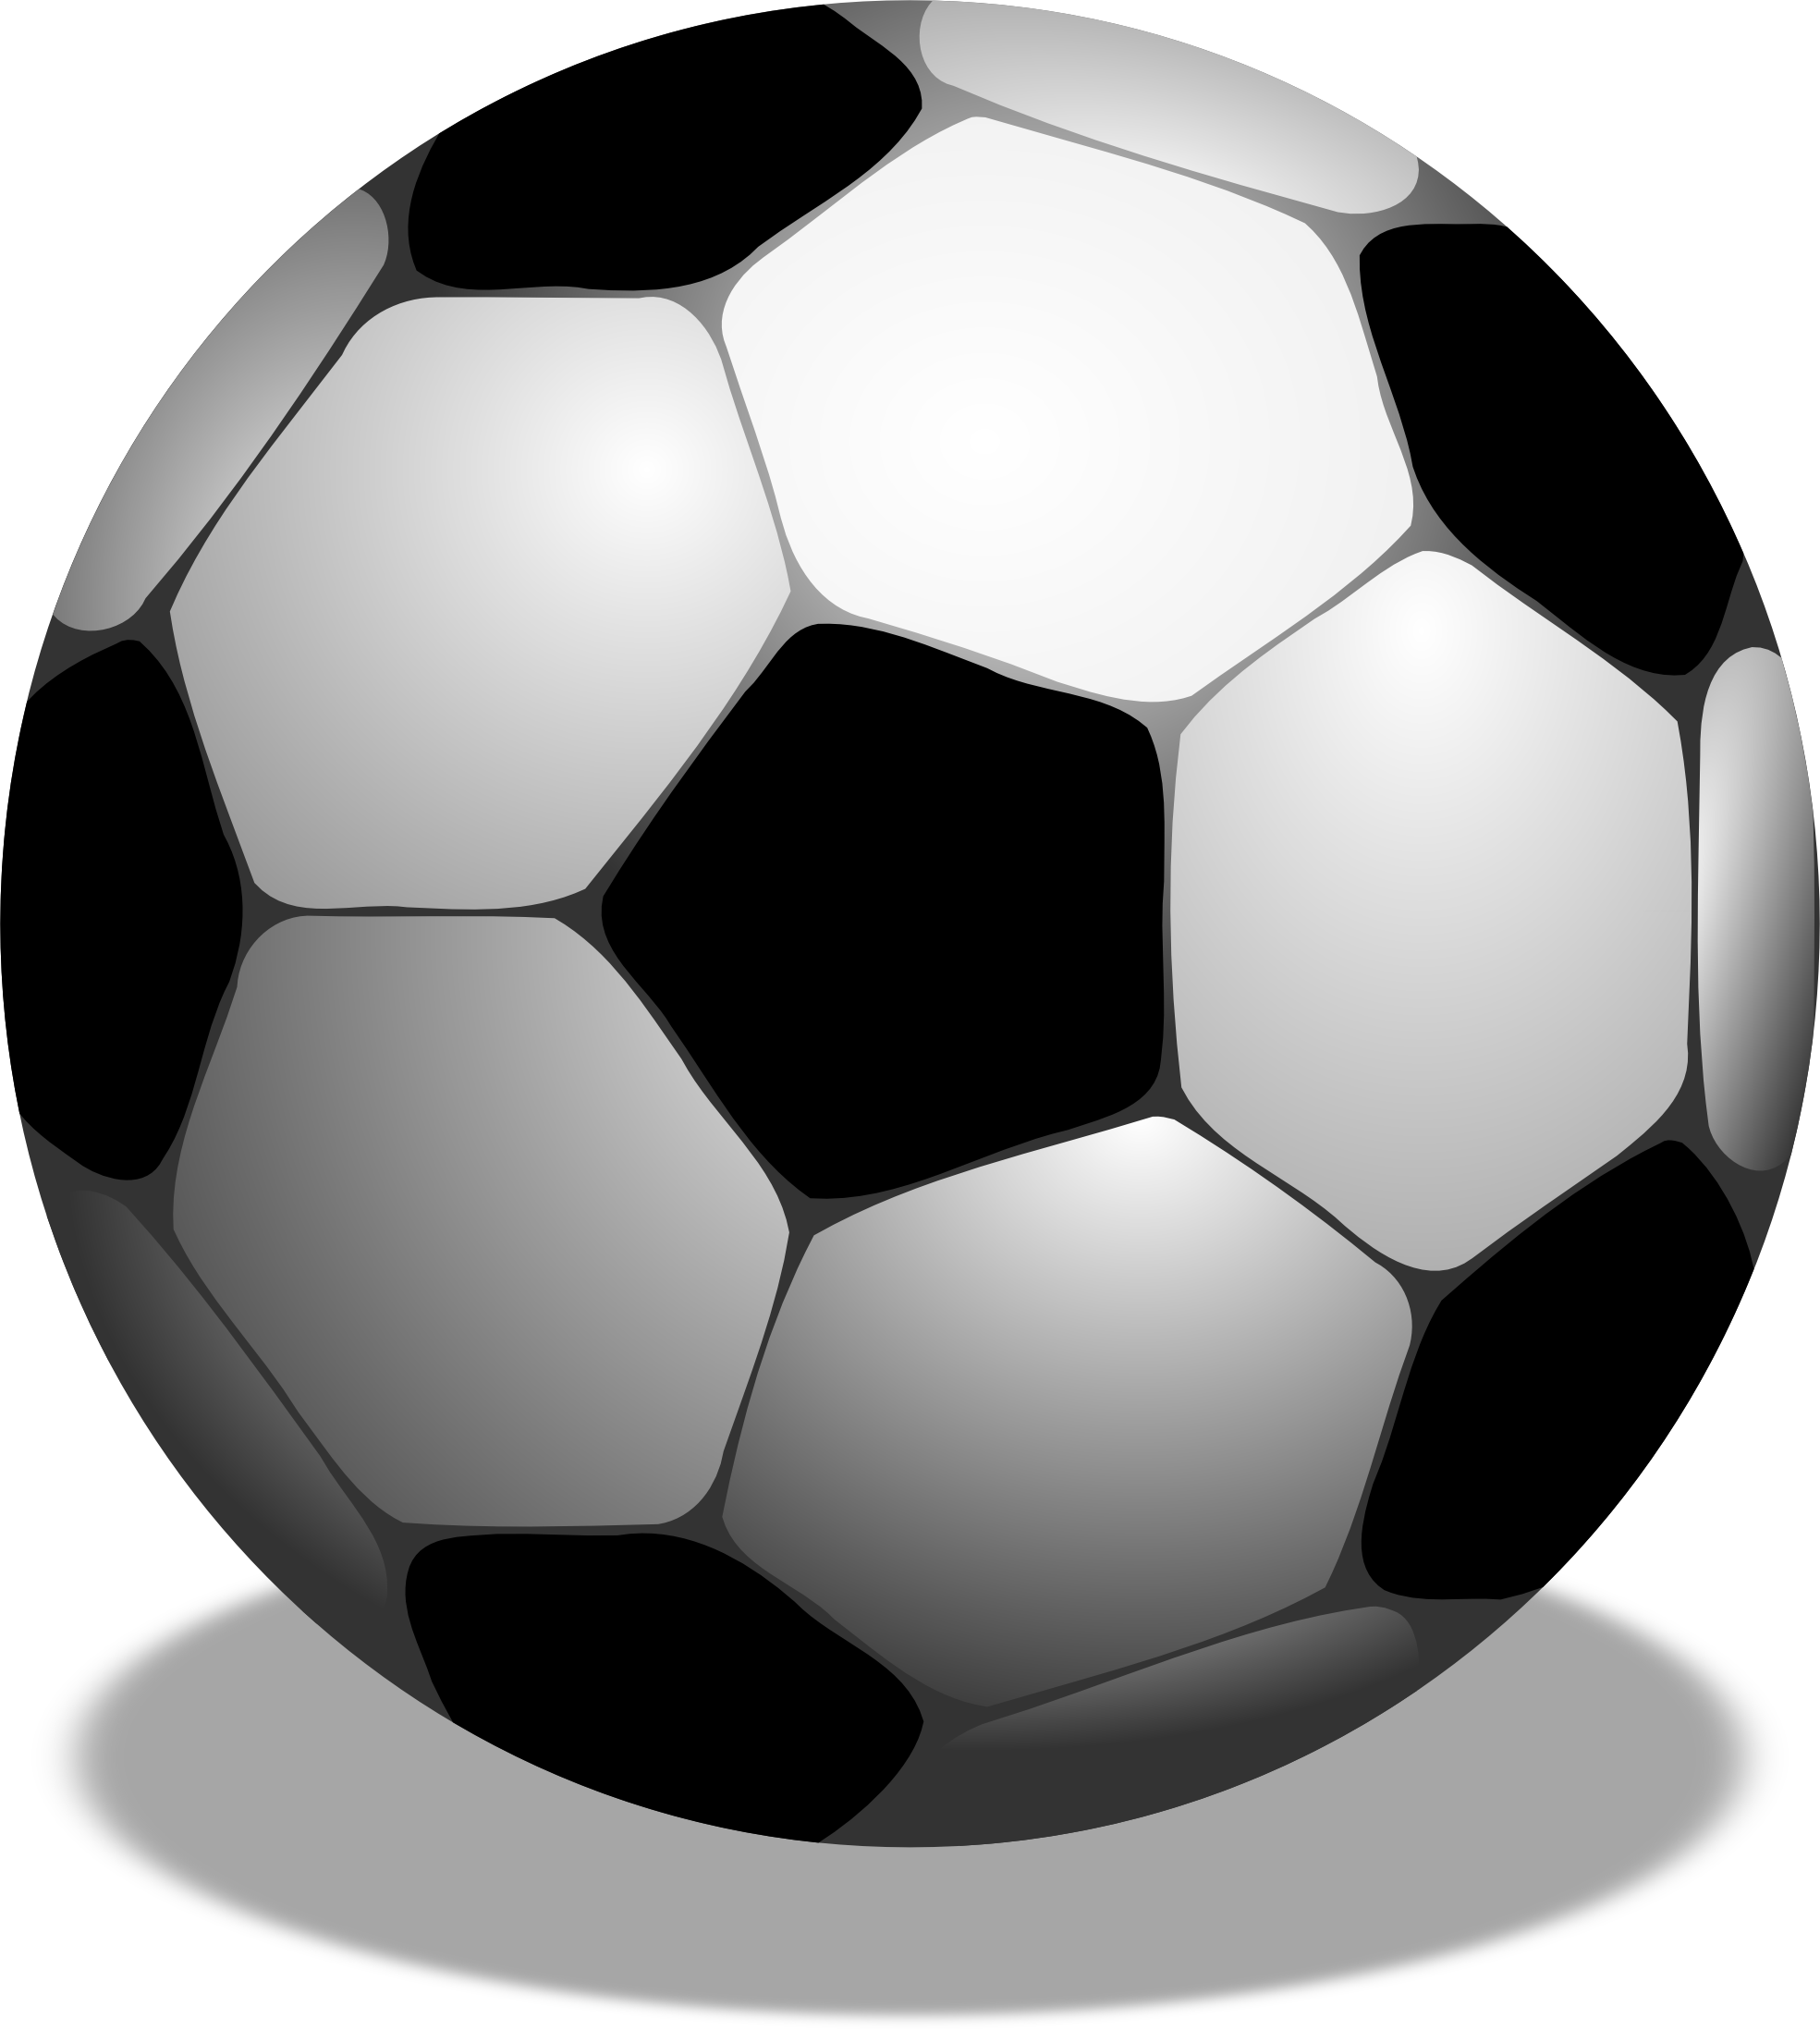 57 Free Soccer Ball Clip Art.